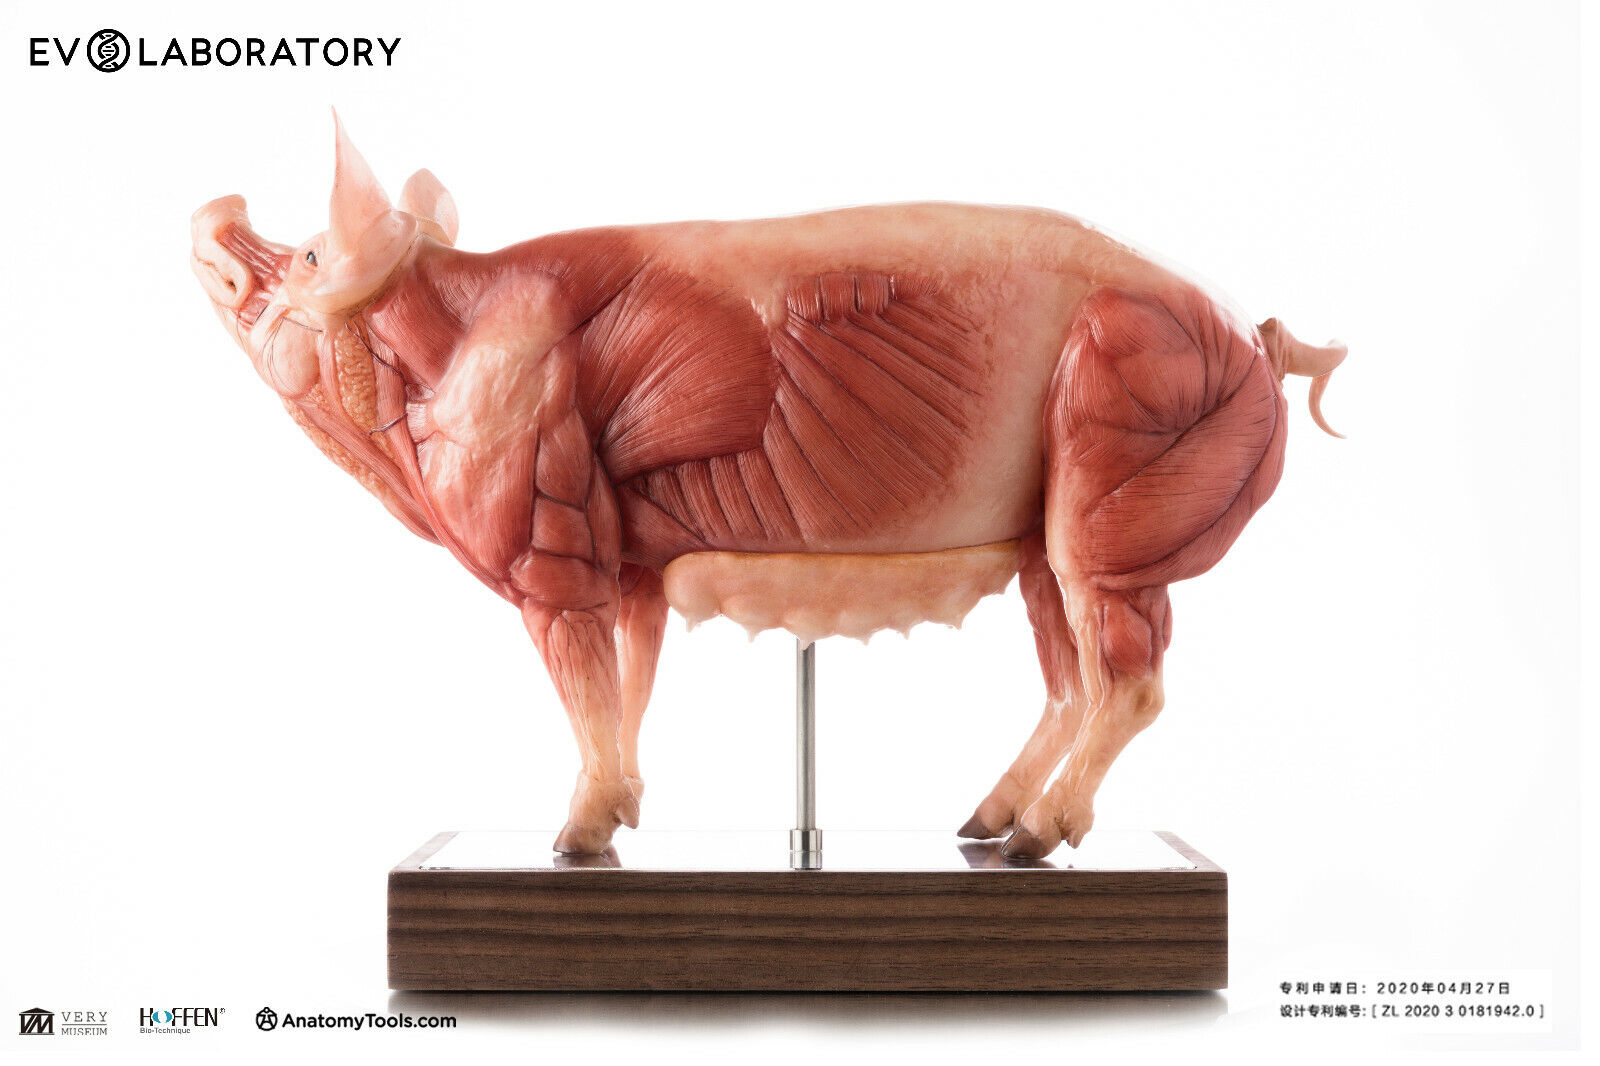 EVOLUTIO - 1/5 PIG ANATOMY PU Medical full color statue - 13.5 x 3.55 x 9.85 in